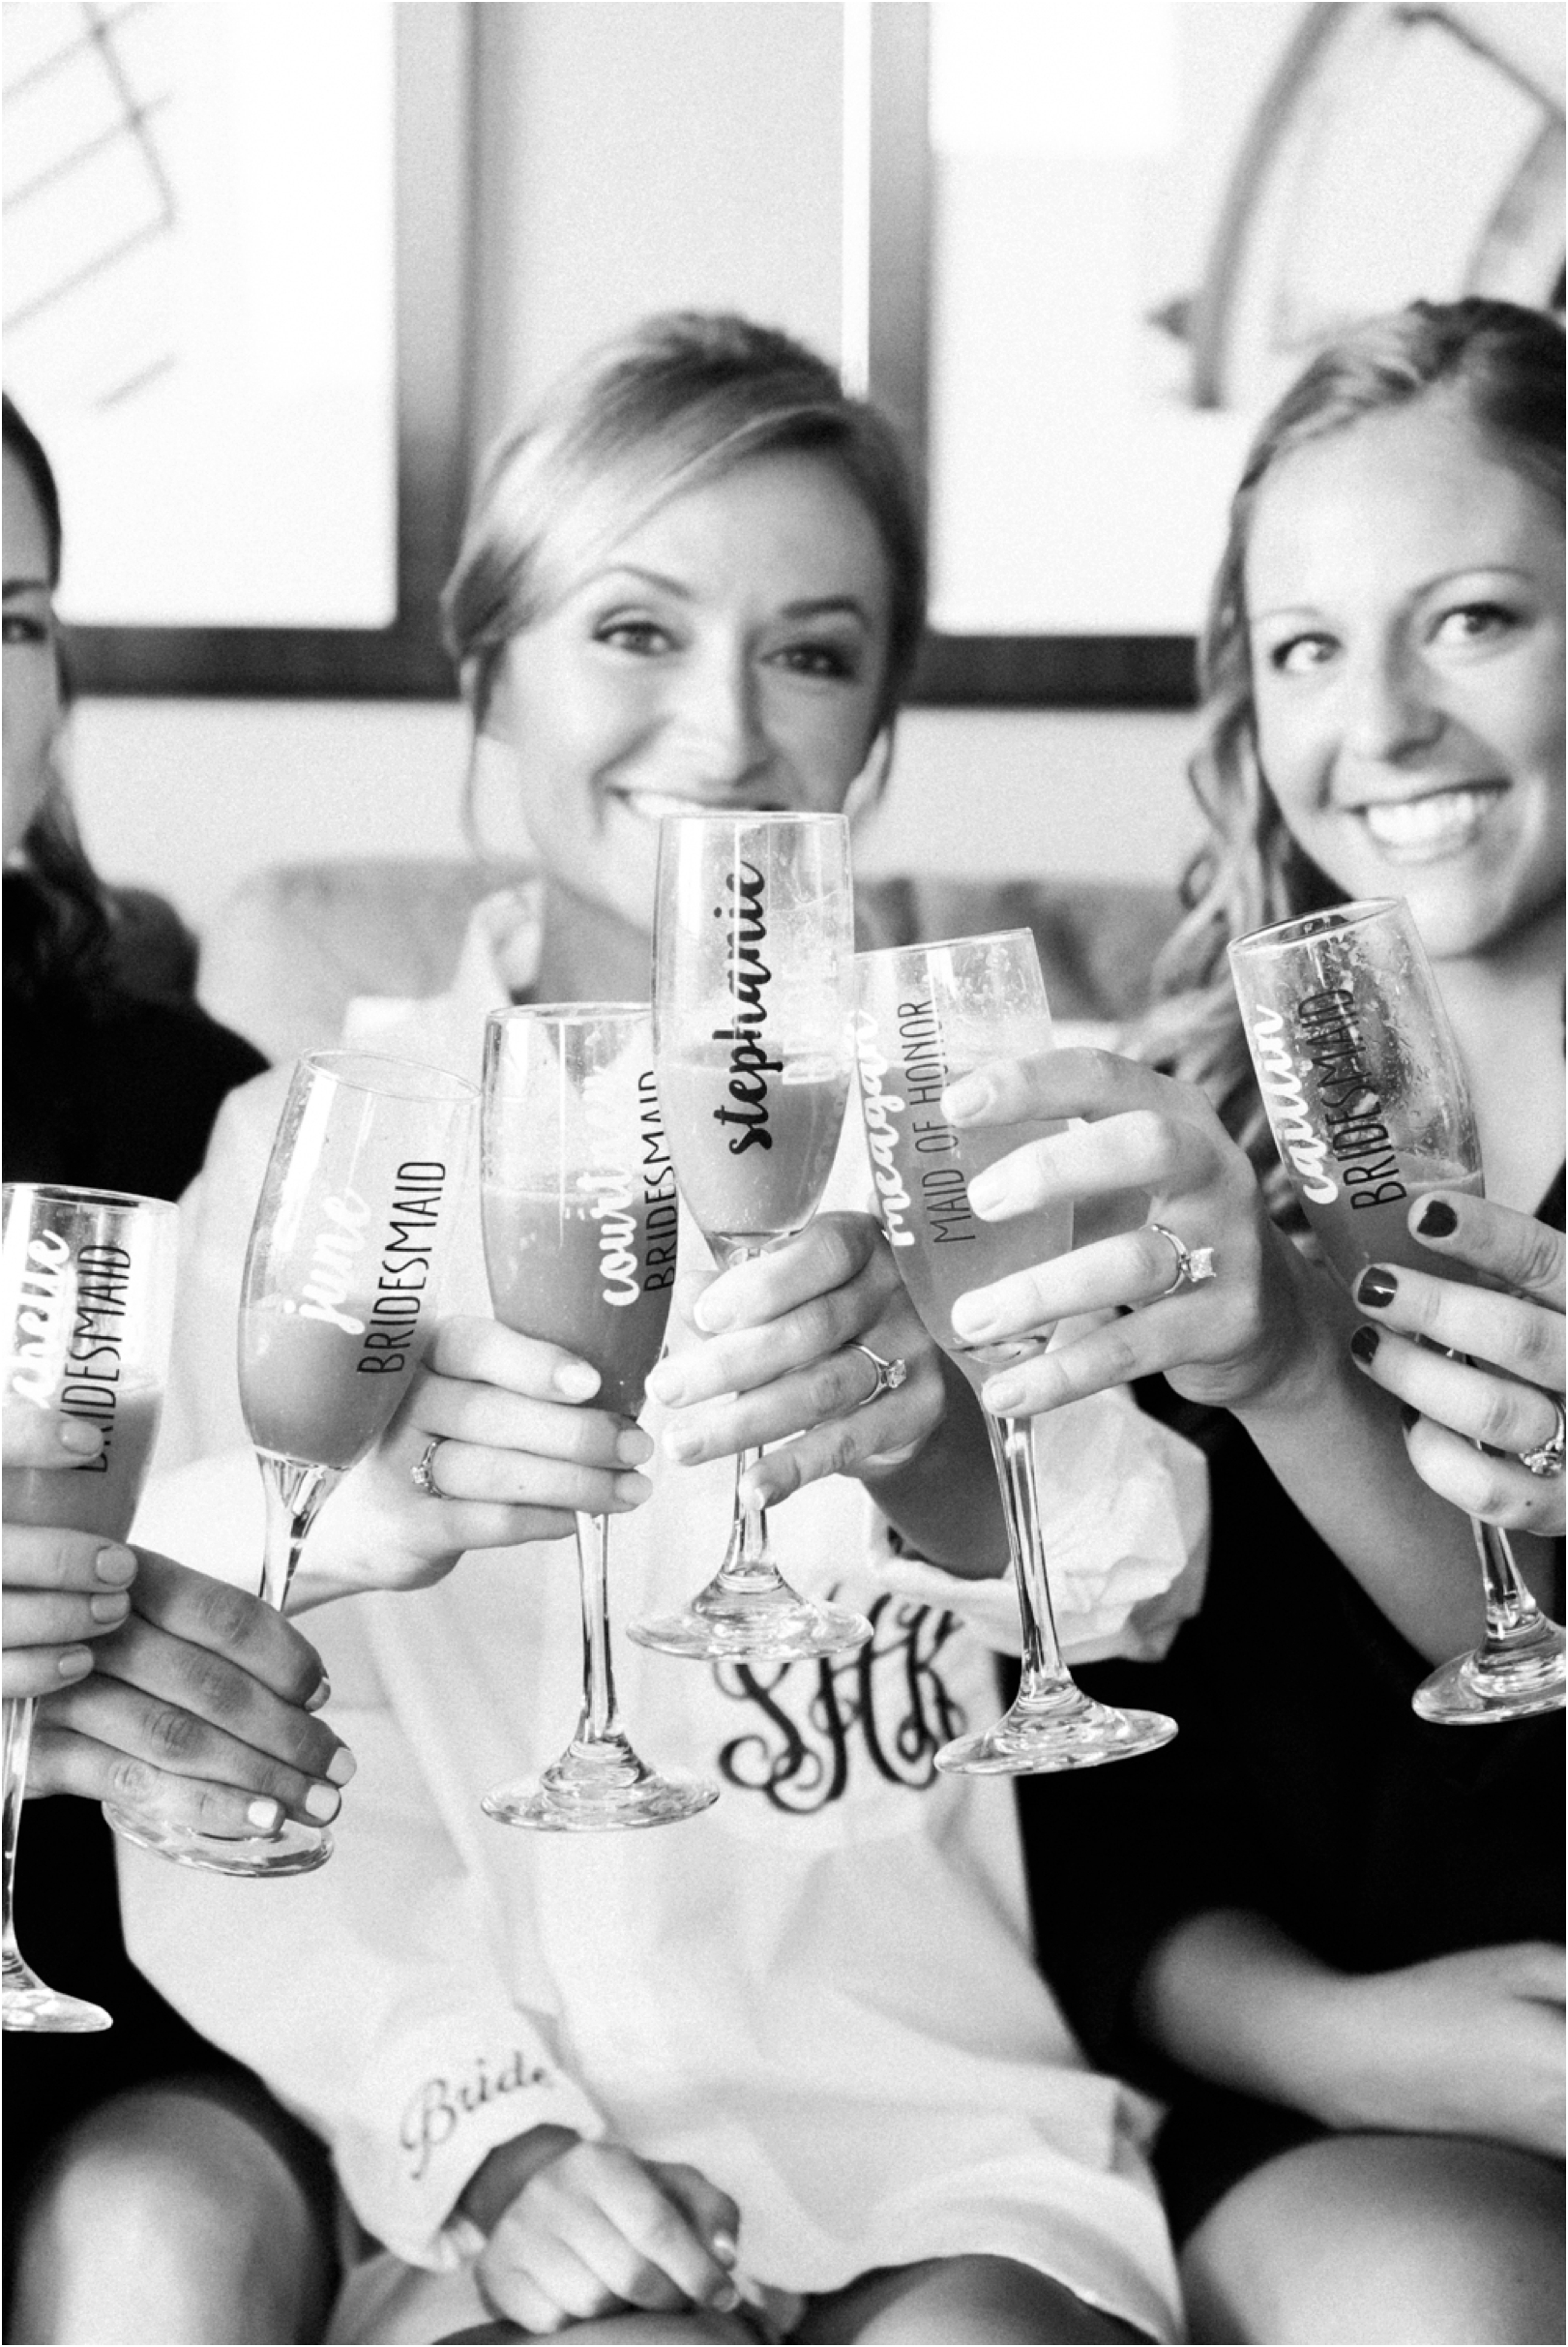 custom-champaign-glasses-for-bridesmaids